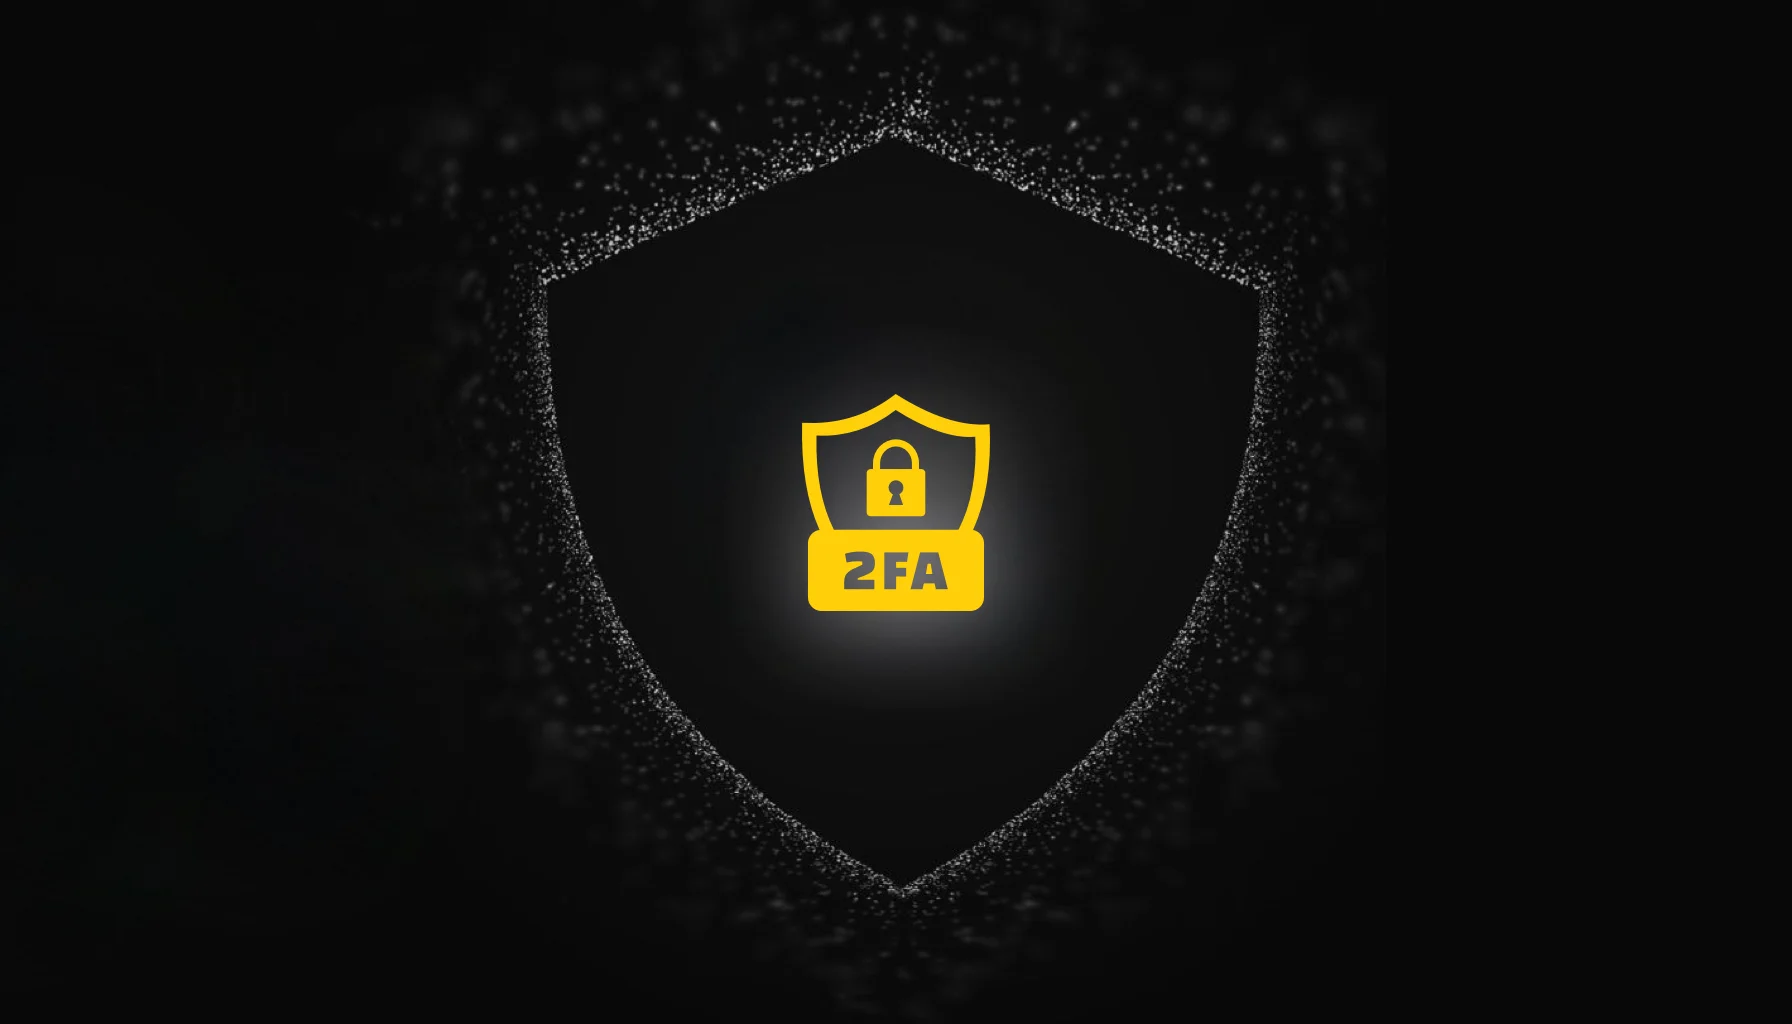 2FA Logo Wallpaper